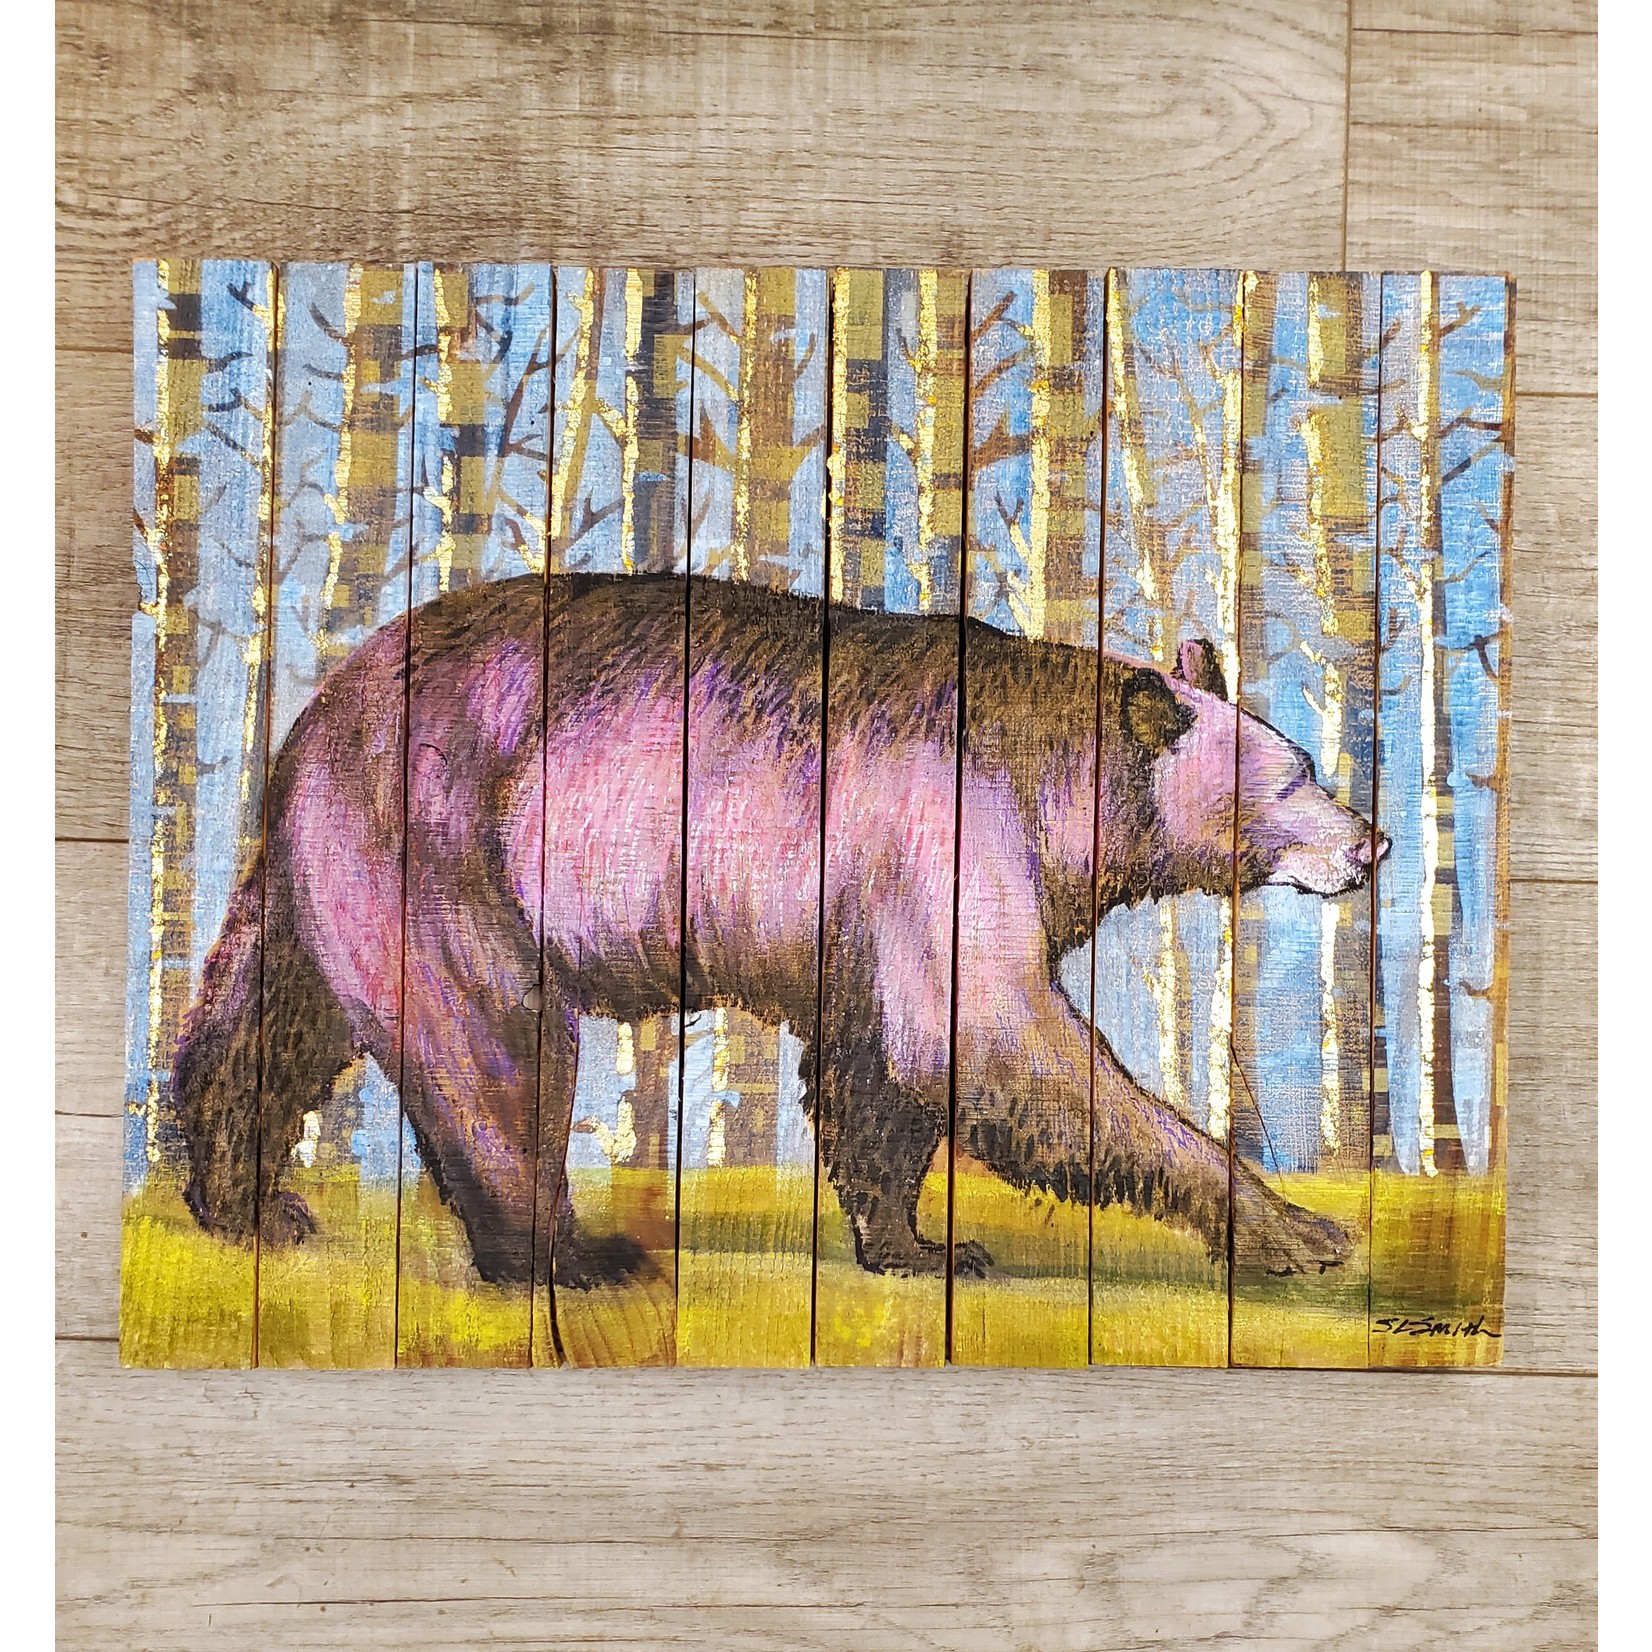 Sara L Smith "Wilding Reclaimed - Walking Bear - Pink"